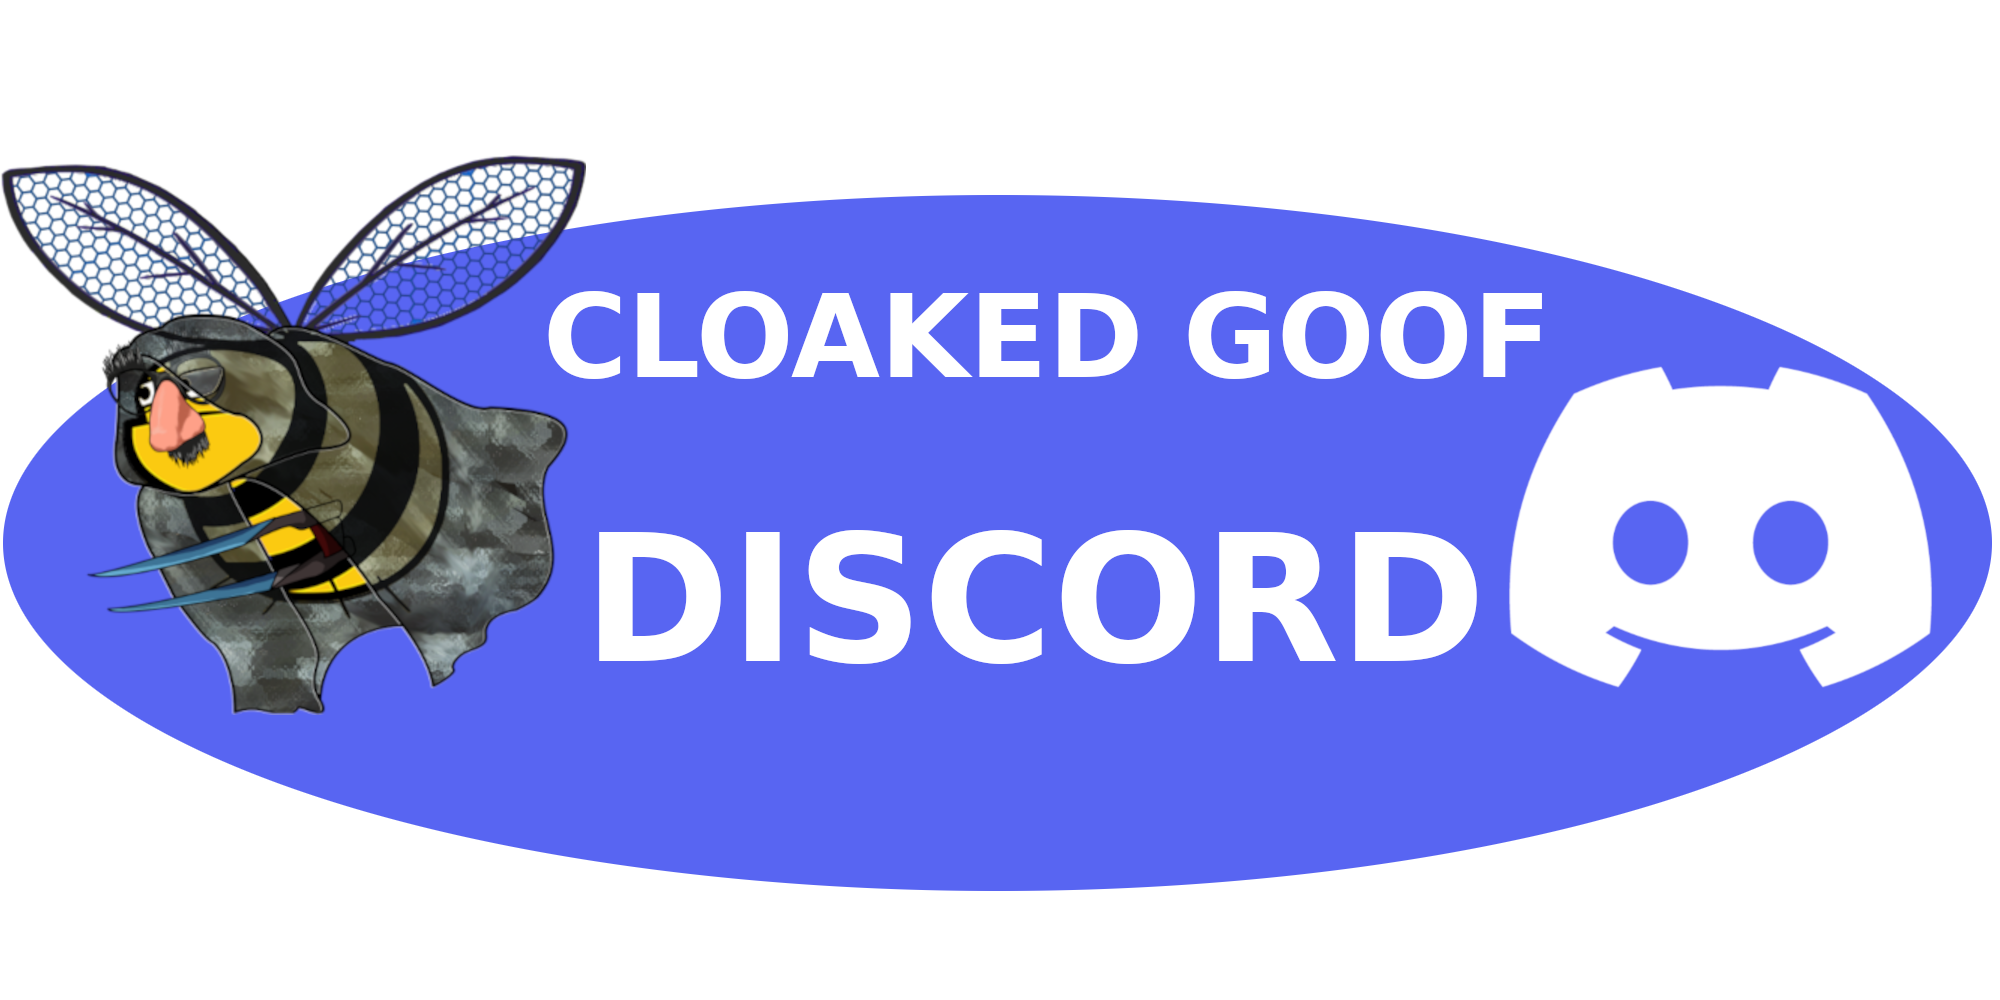 Corp Discord Server Link